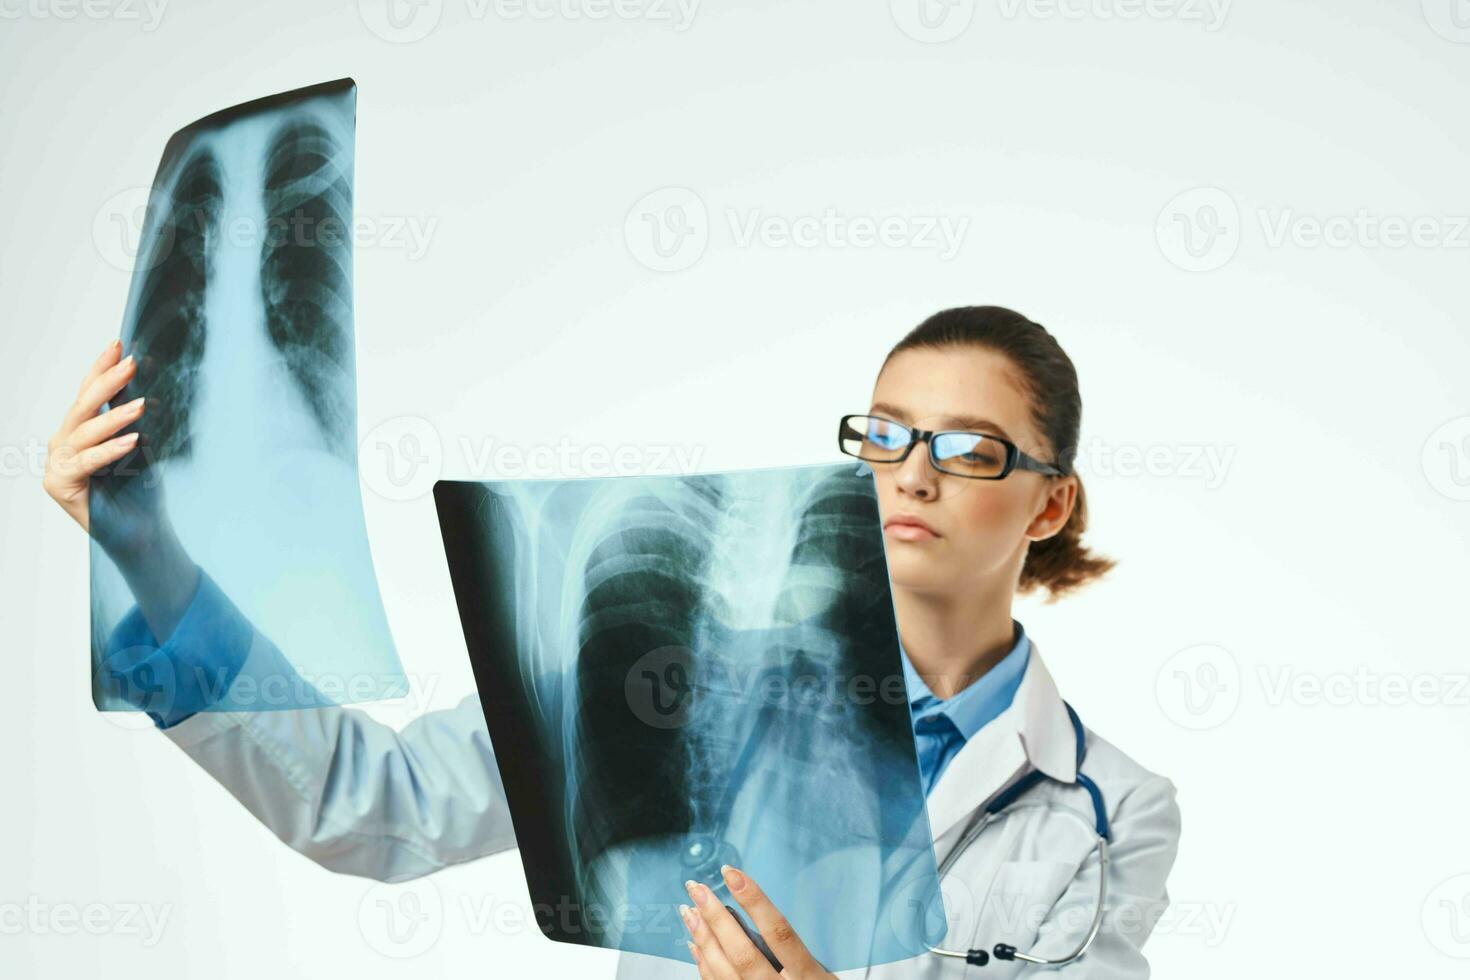 femelle médecin médicament hôpital radiographie examen photo